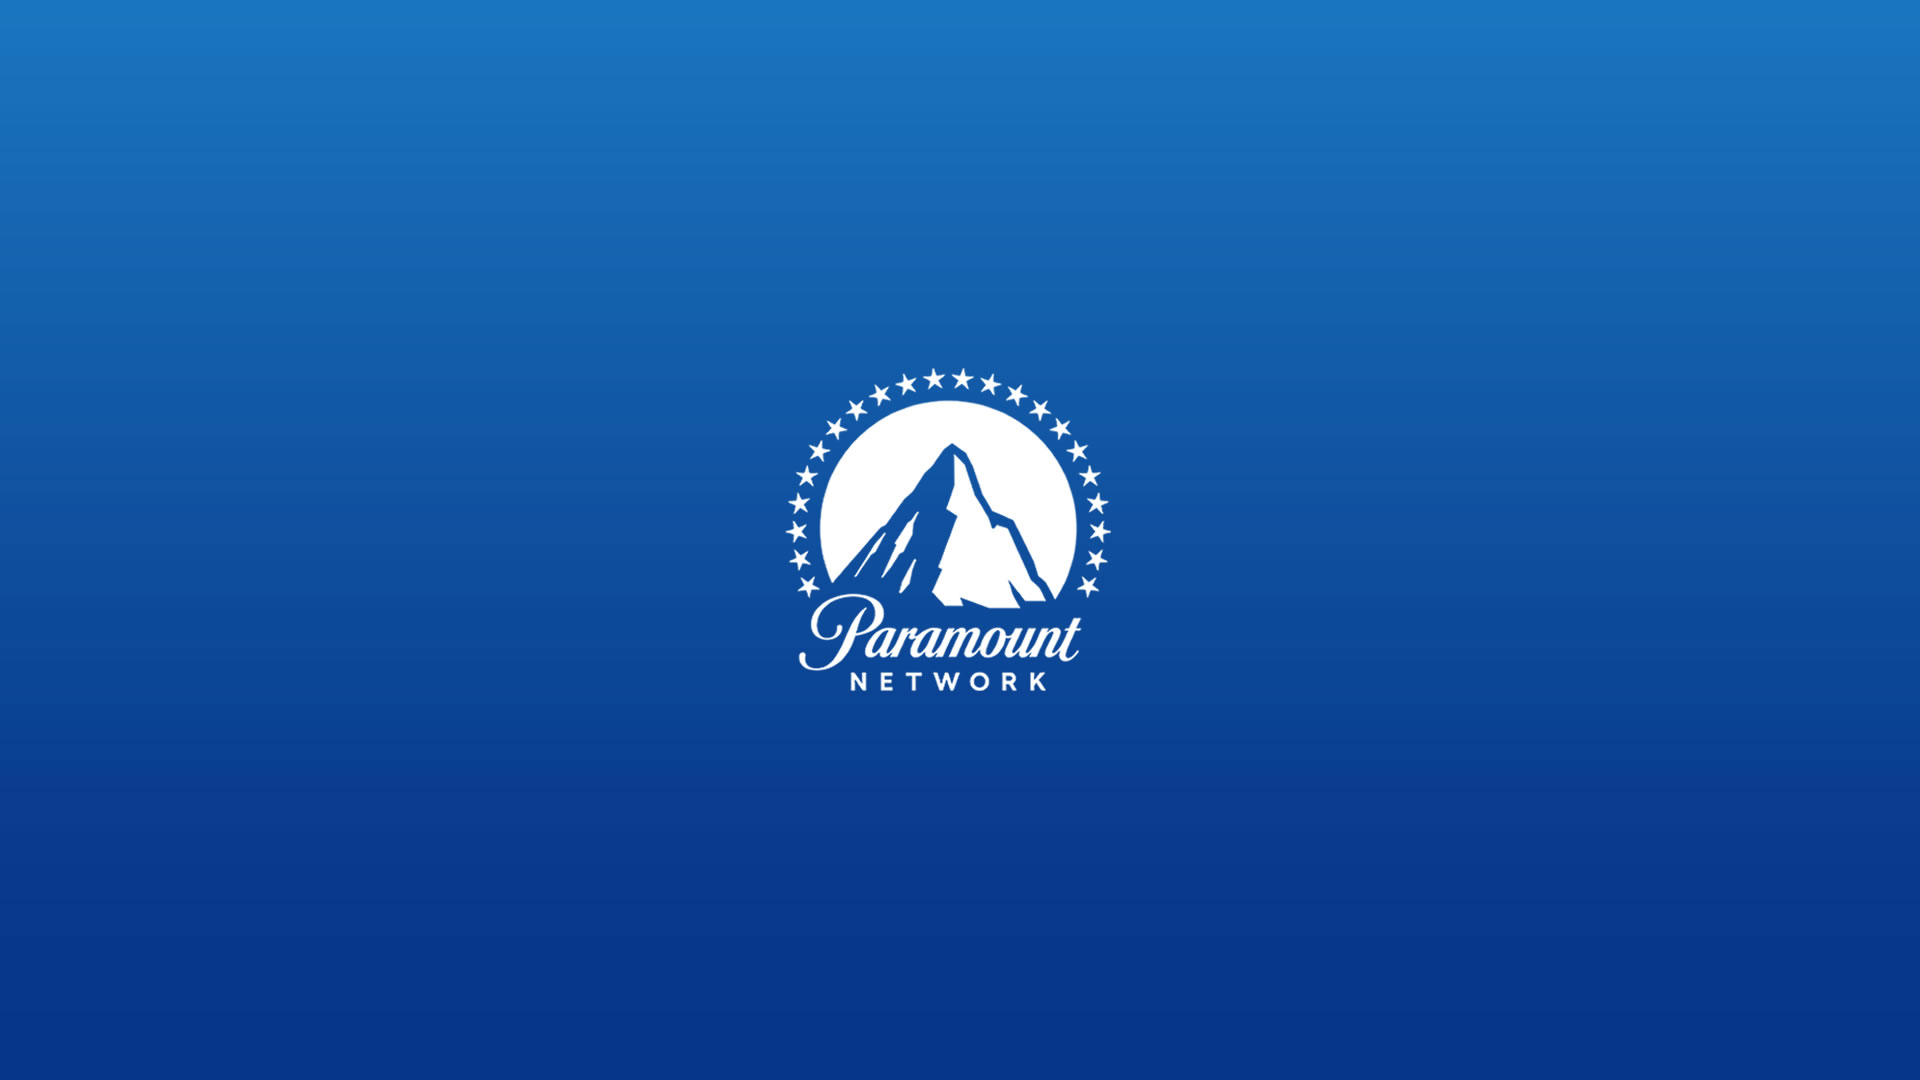 Paramount Network Online